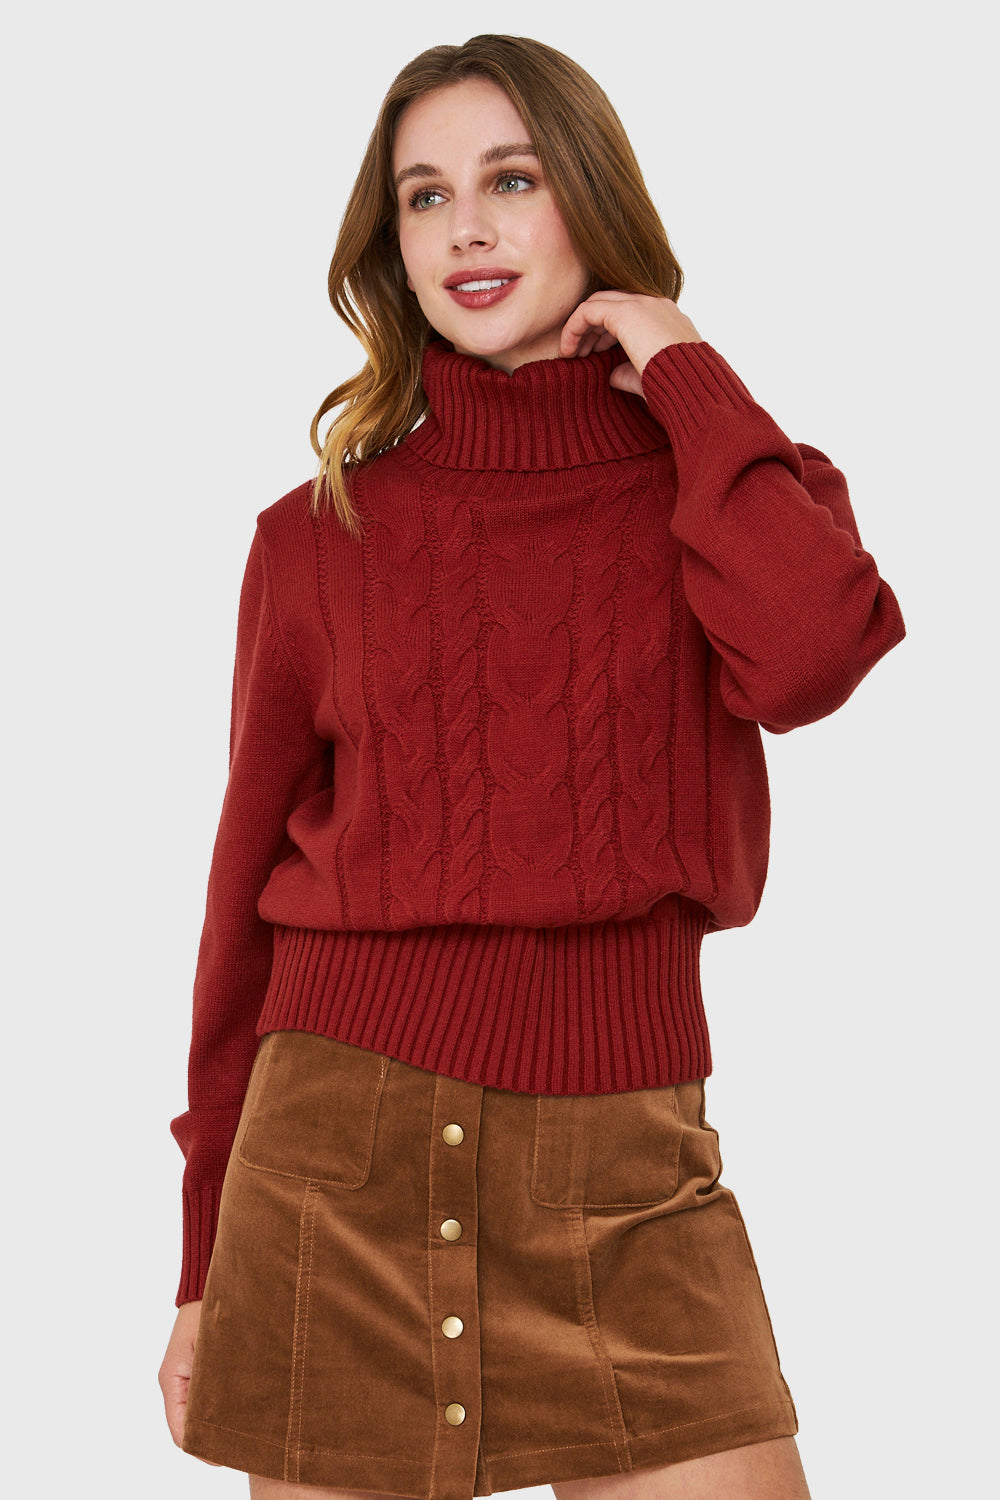 Sweater Tipo Cadeneta Terracota